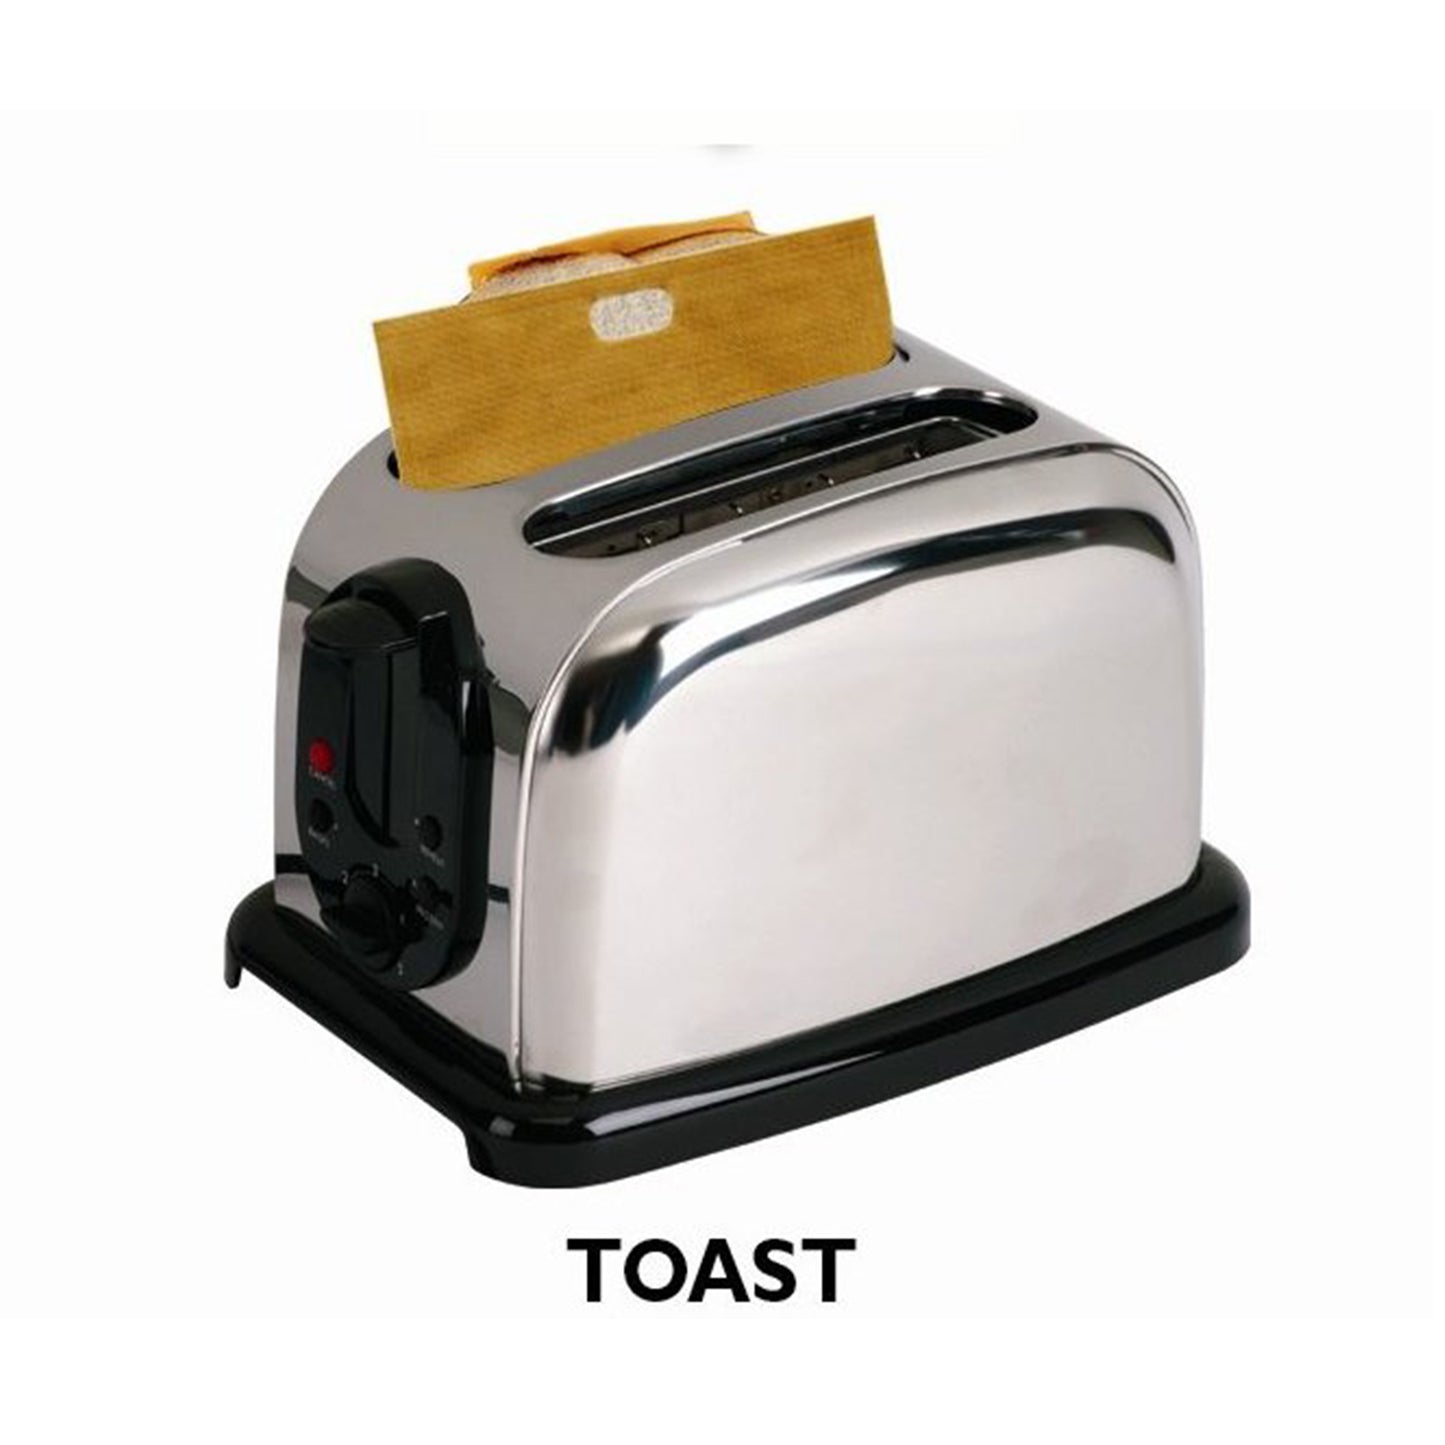 Toastabags - 50 Use